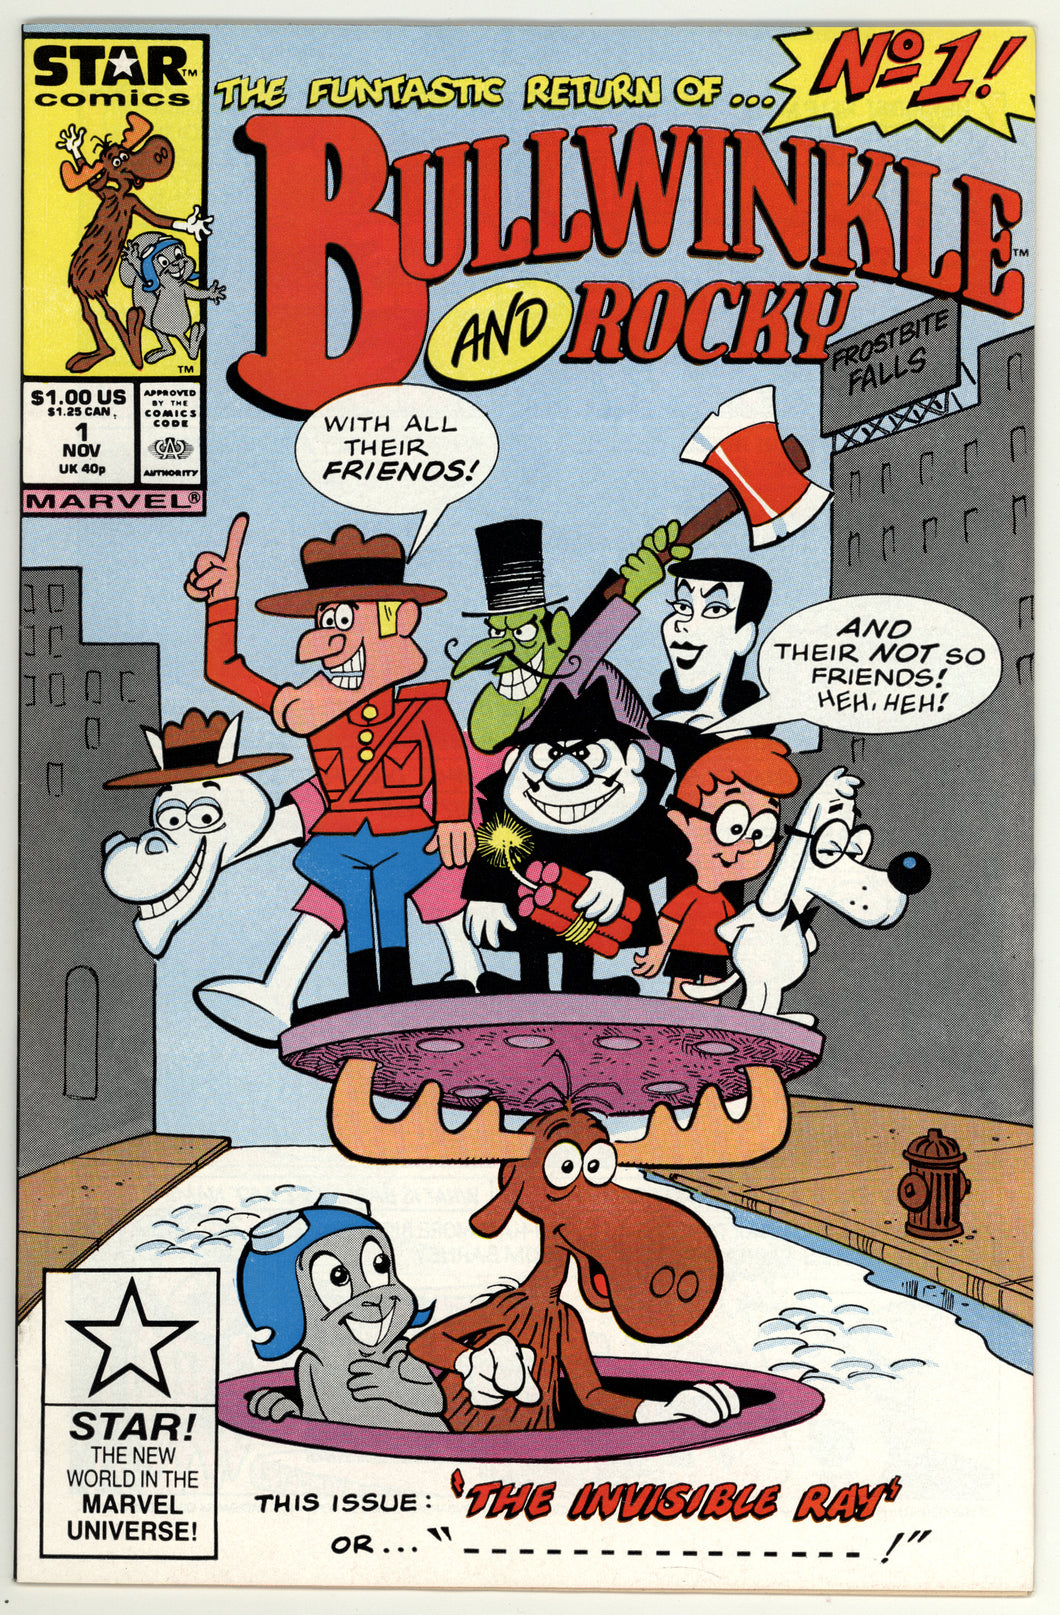 BULLWINKLE AND ROCKY COMICS #1-9 COMPLETE SET (MARVEL/ STAR COMICS)